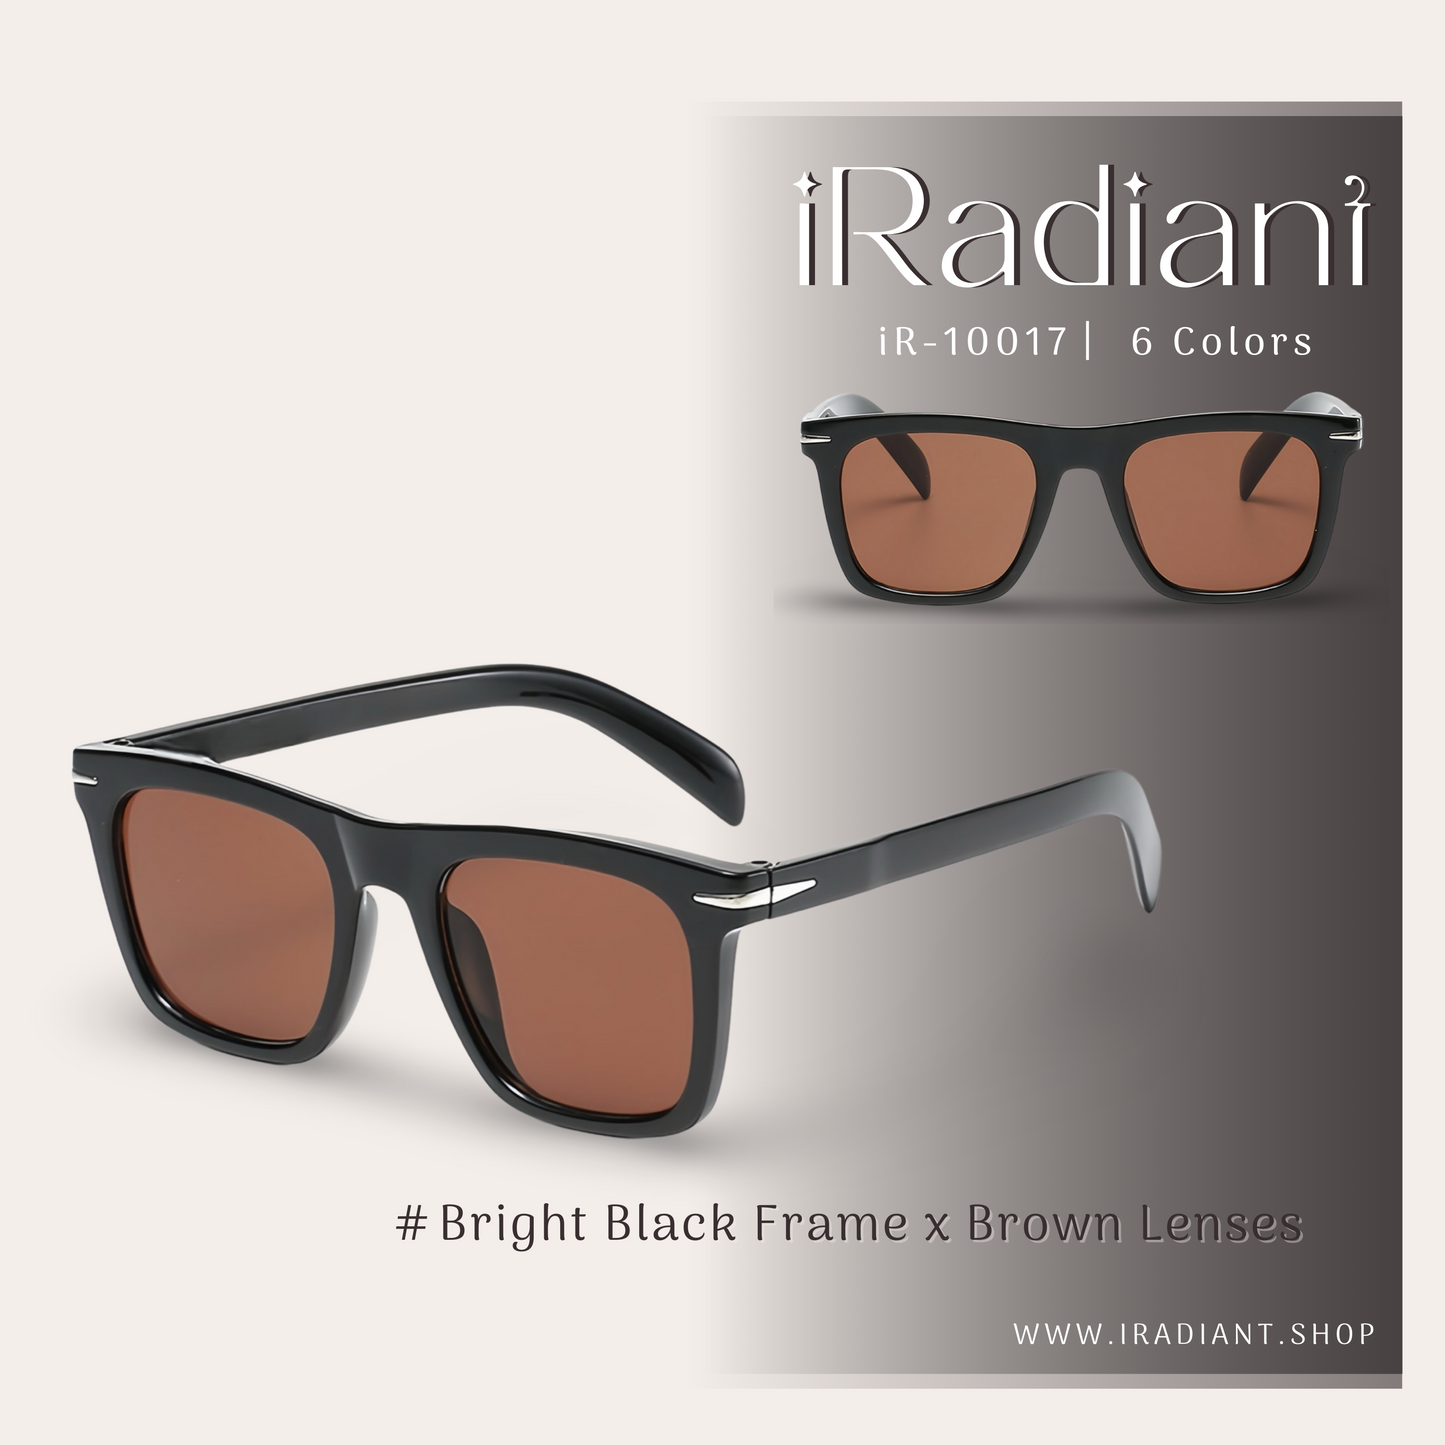 iR-10017-B ︳iRadiant Classic Retro Frame Shades  ︳Unisex ︳Bright Black Frame x Brown Lenses